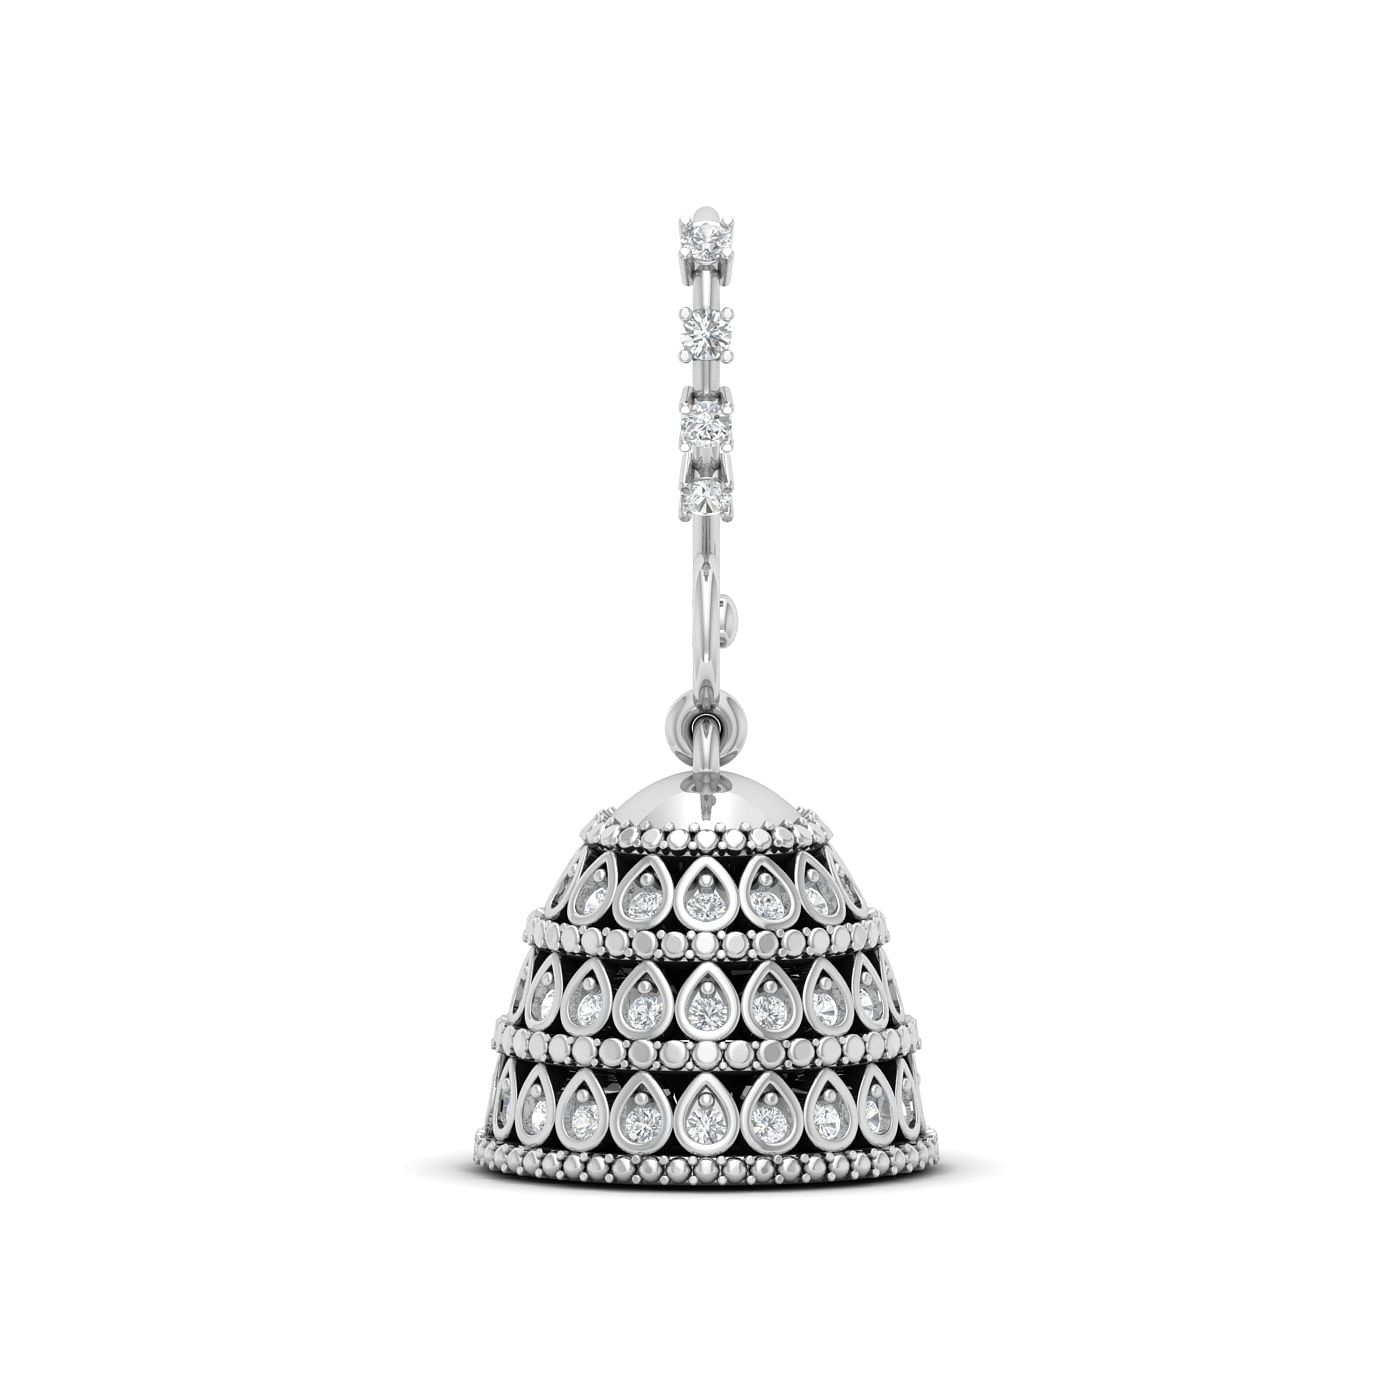 10k White Gold Geometric Flora Diamond Earrings for daily wear